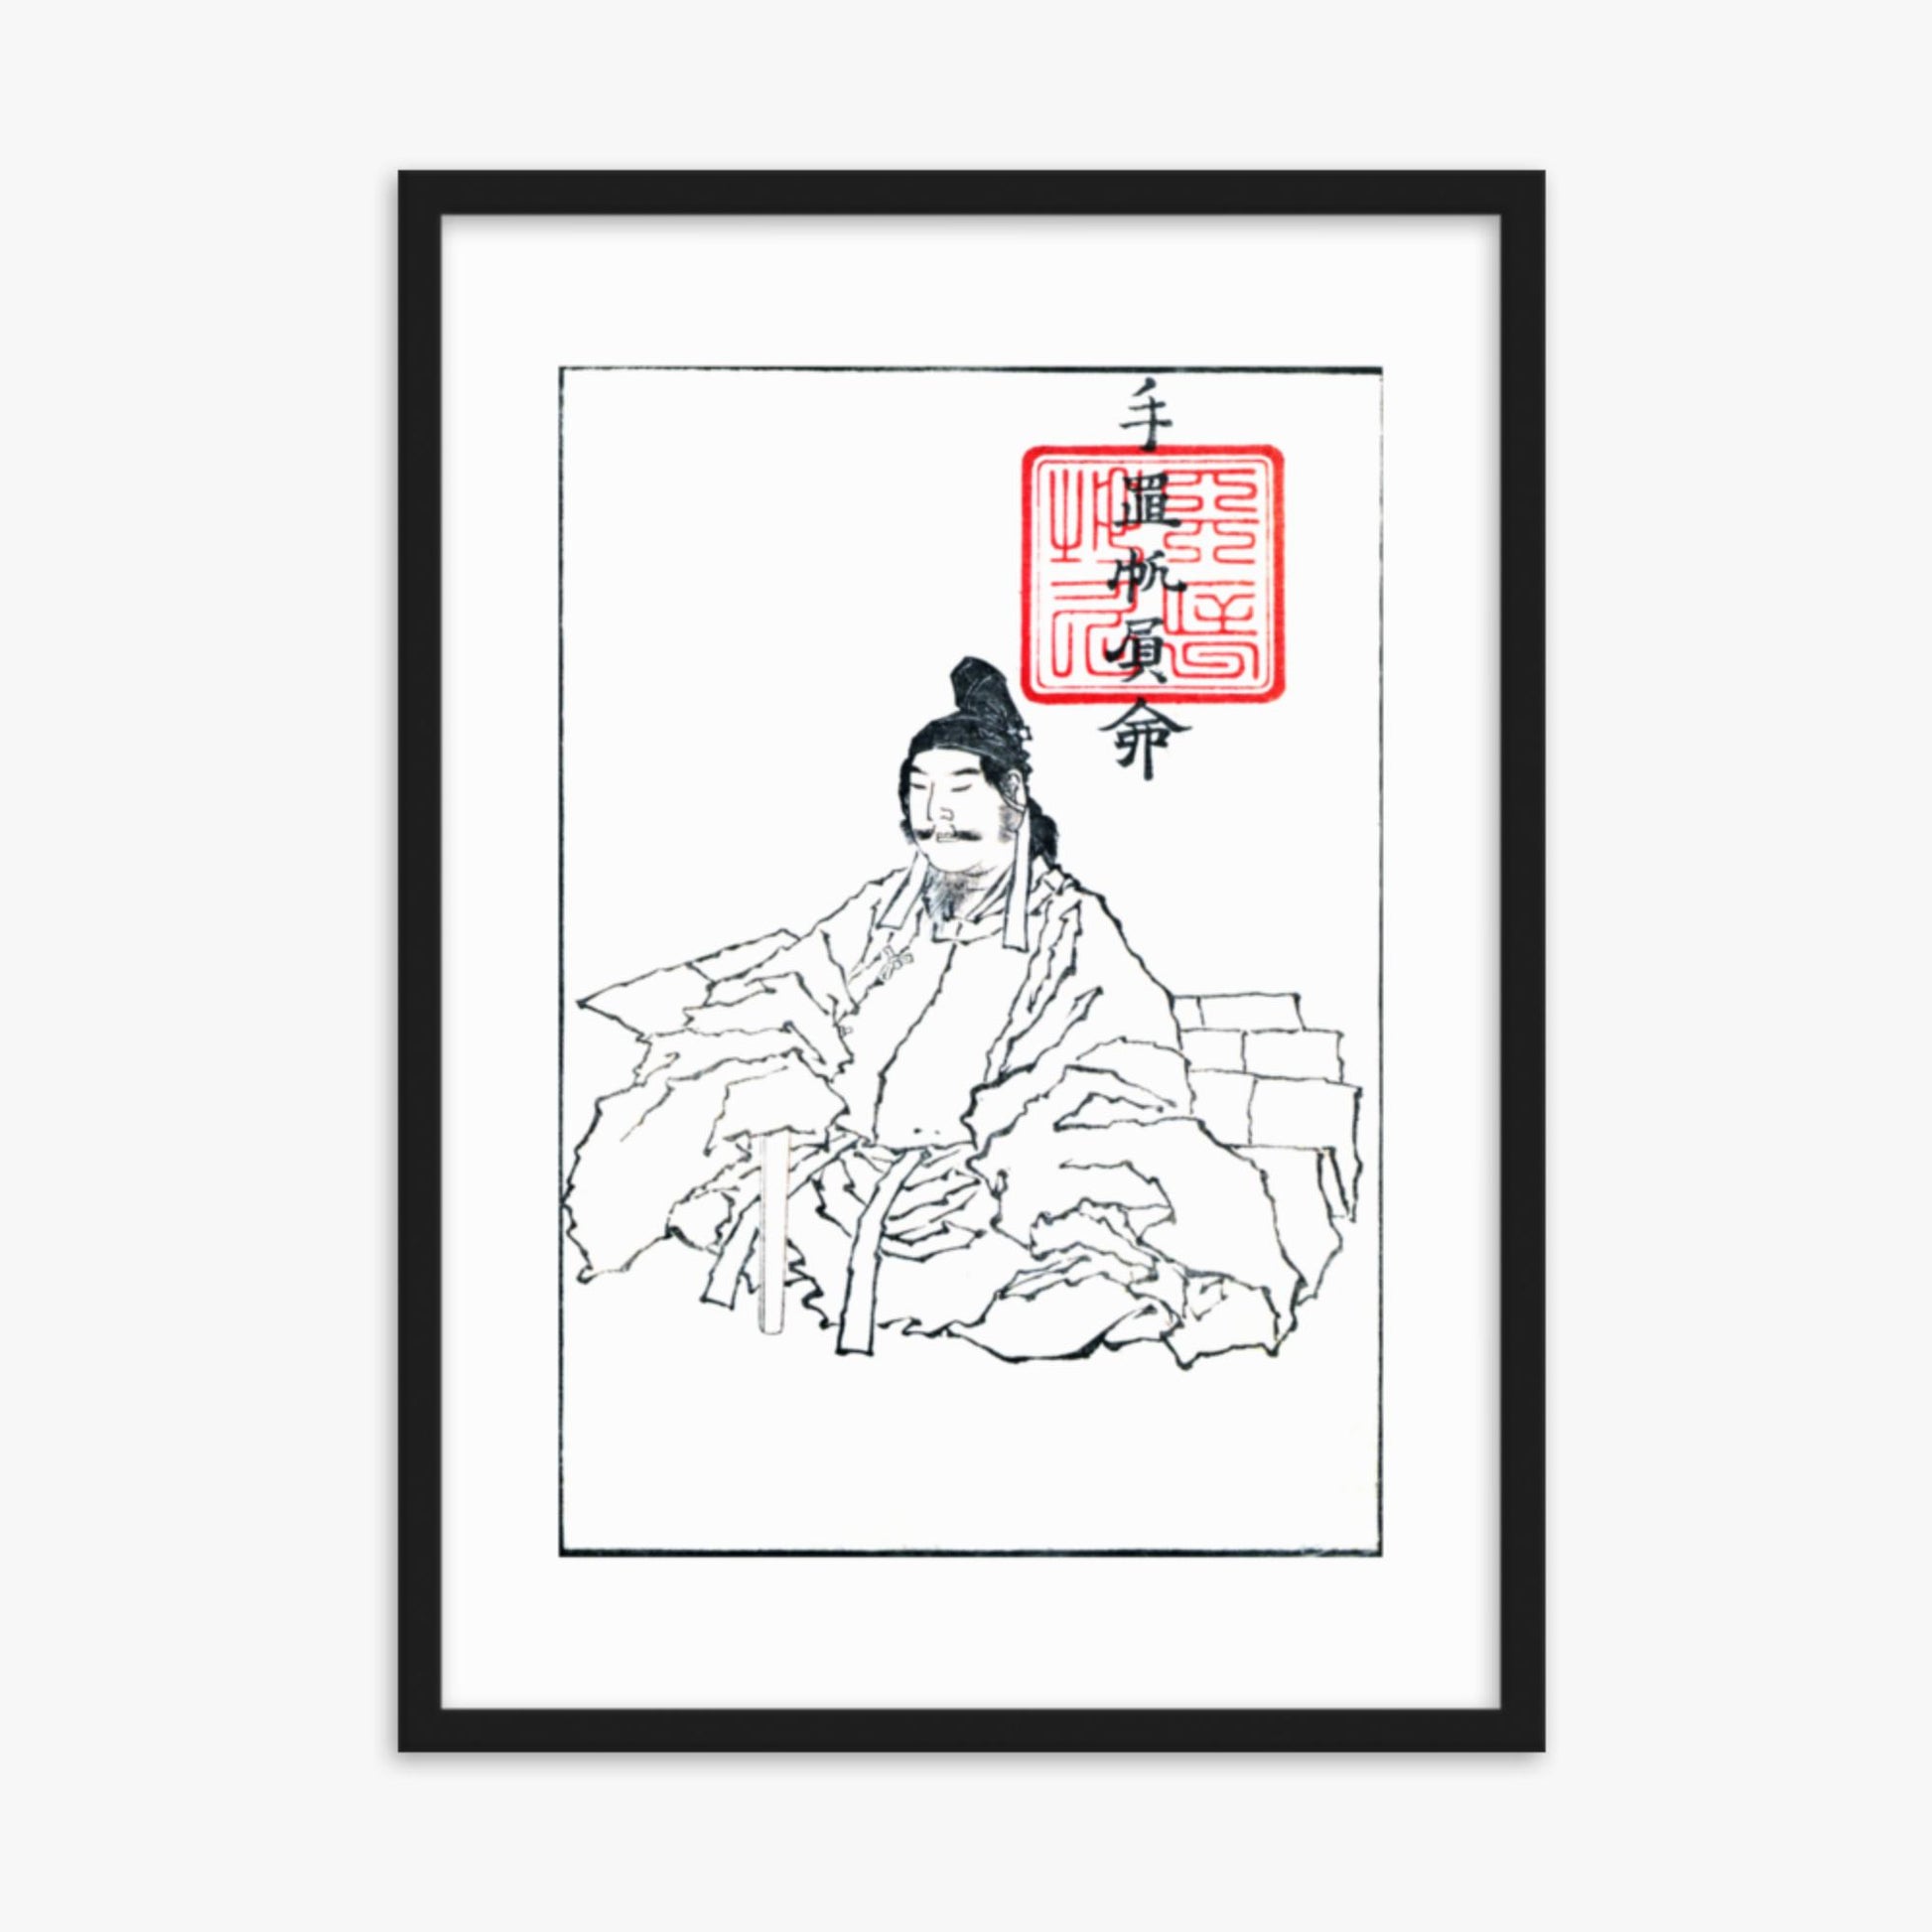 Katsushika Hokusai - Transmitting the Spirit, Revealing the Form of Things: Hokusai Sketchbooks, volume 5 (part) (Denshin kaishu: Hokusai manga, gohen) 50x70 cm Poster With Black Frame